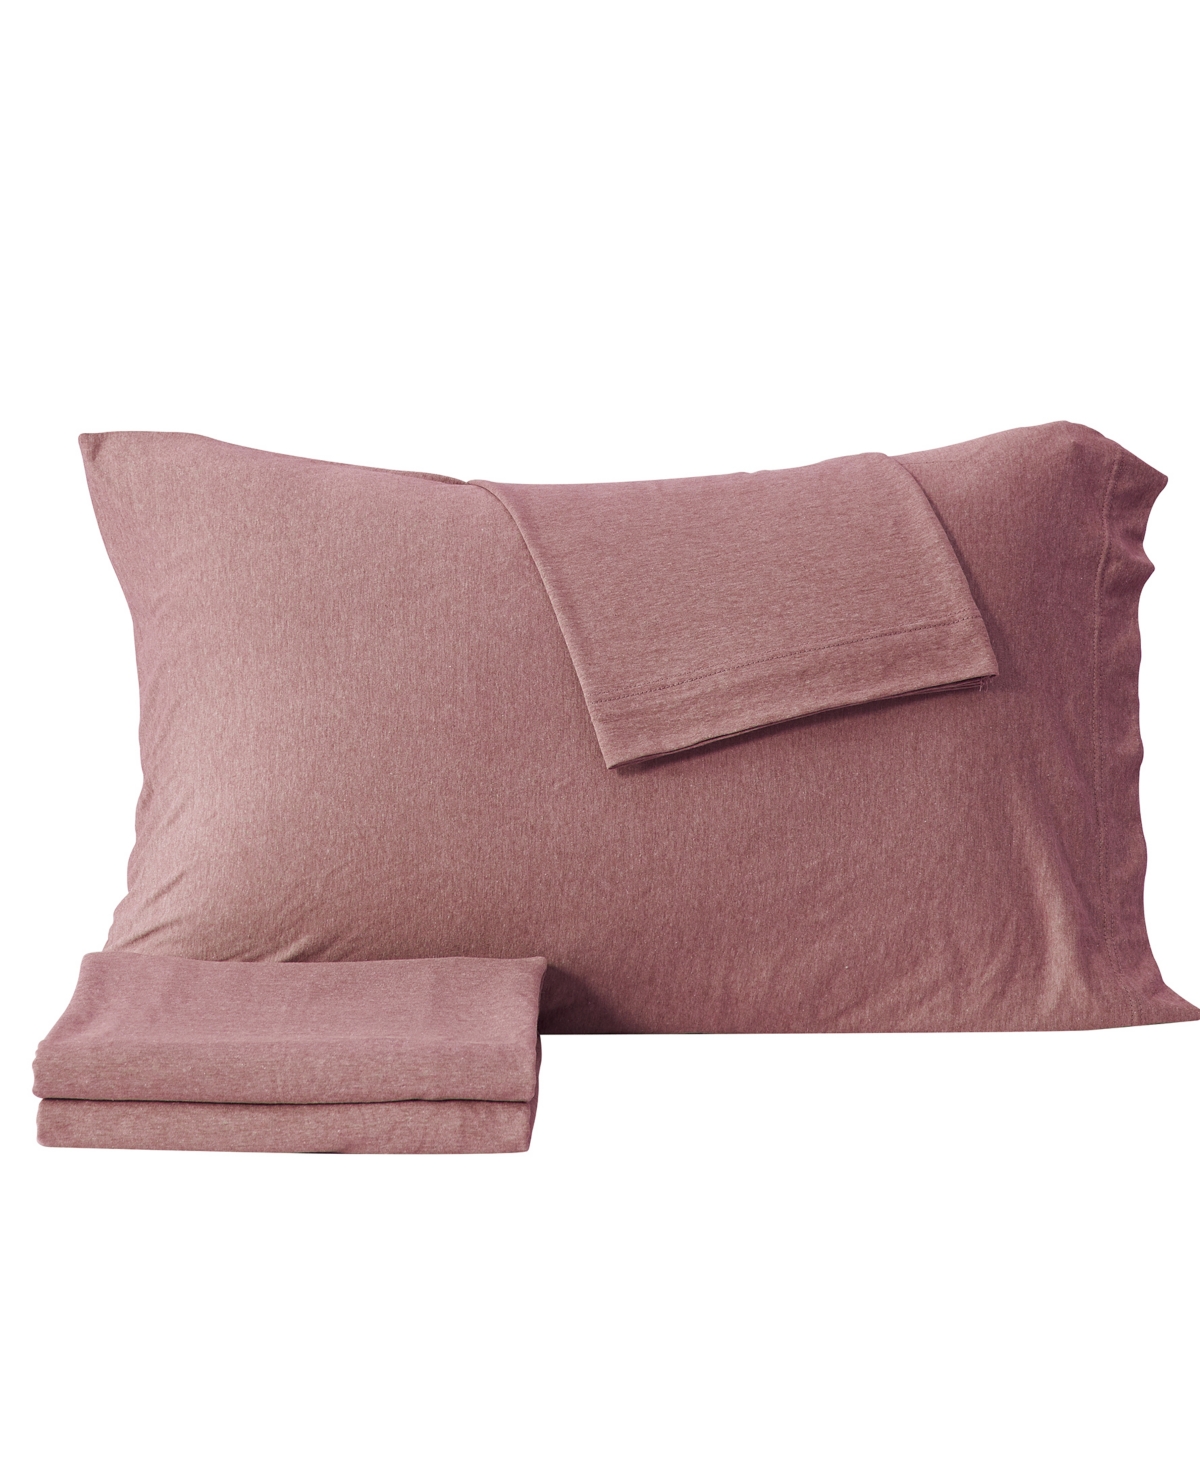 Premium Comforts Heathered Melange T-shirt Jersey Knit Cotton Blend 4 Piece Sheet Set, California King In Heathered Dusty Rose